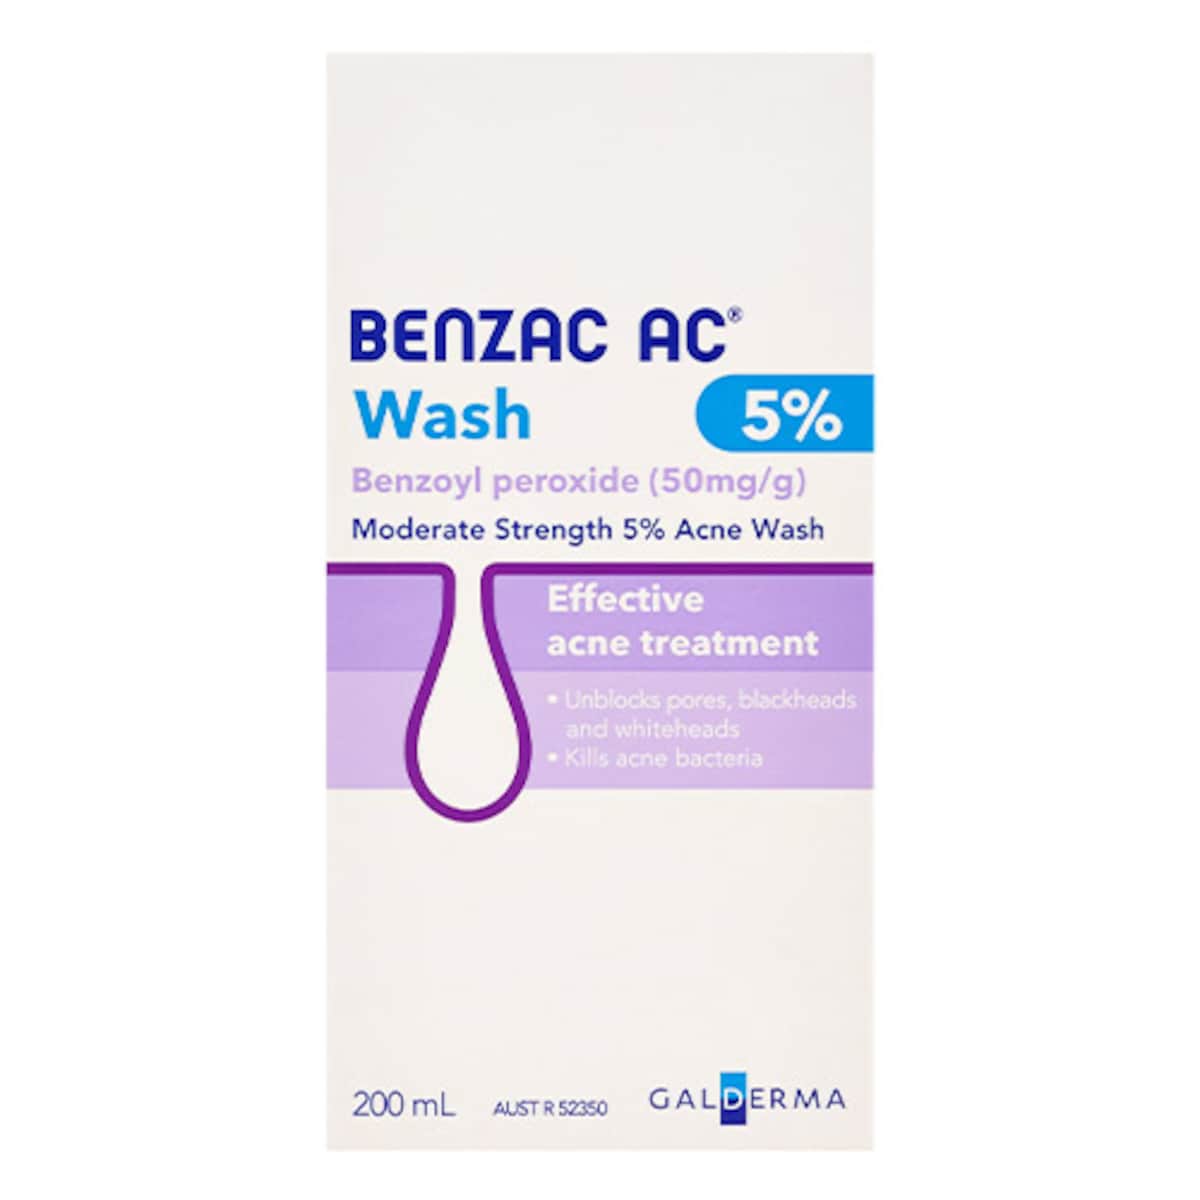 Benzac AC Moderate Strength 5.0% Acne Wash 200ml